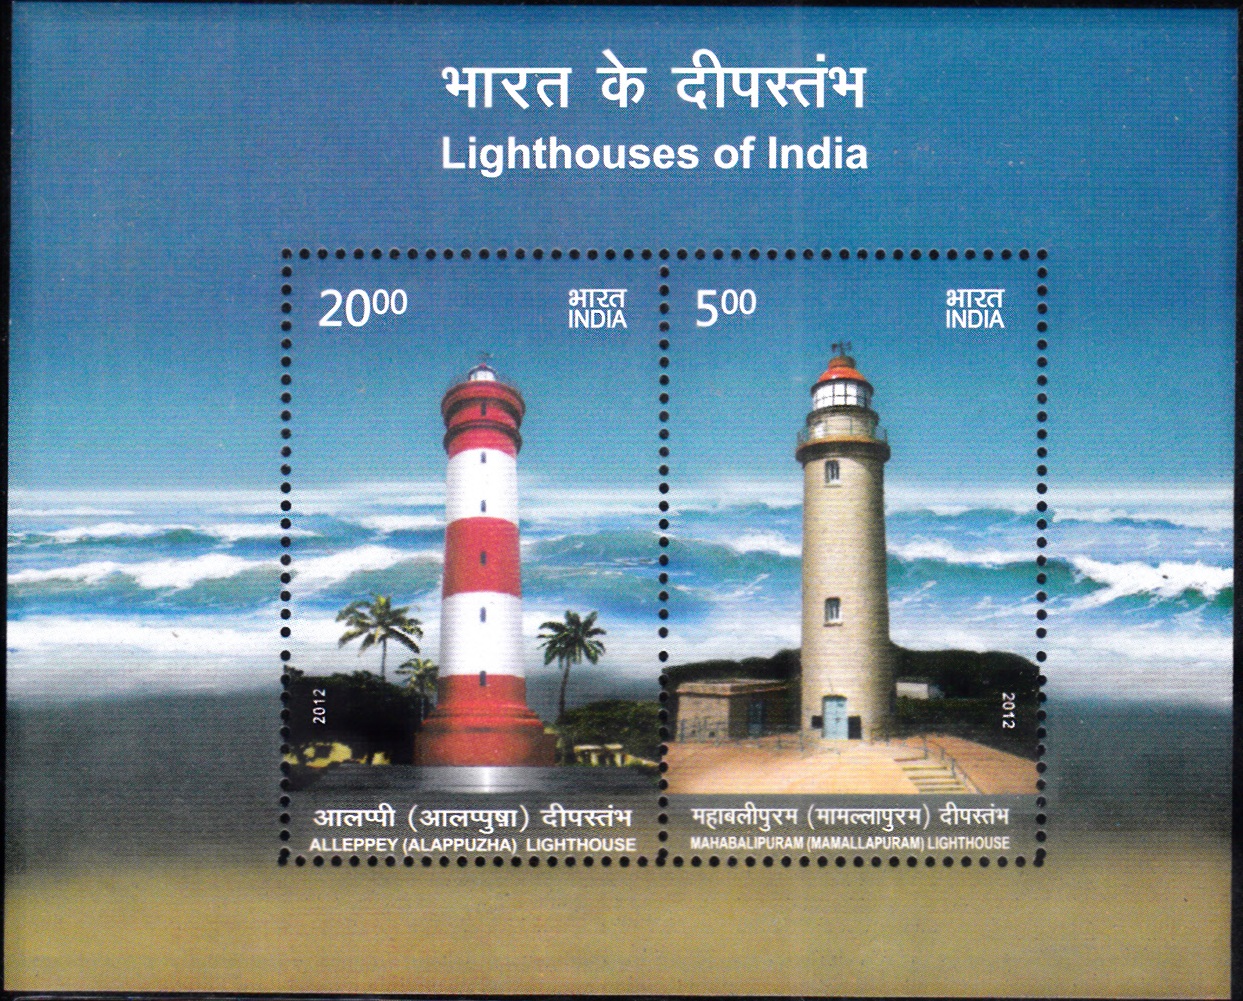 Alappuzha and Mahabalipuram Lighthouses